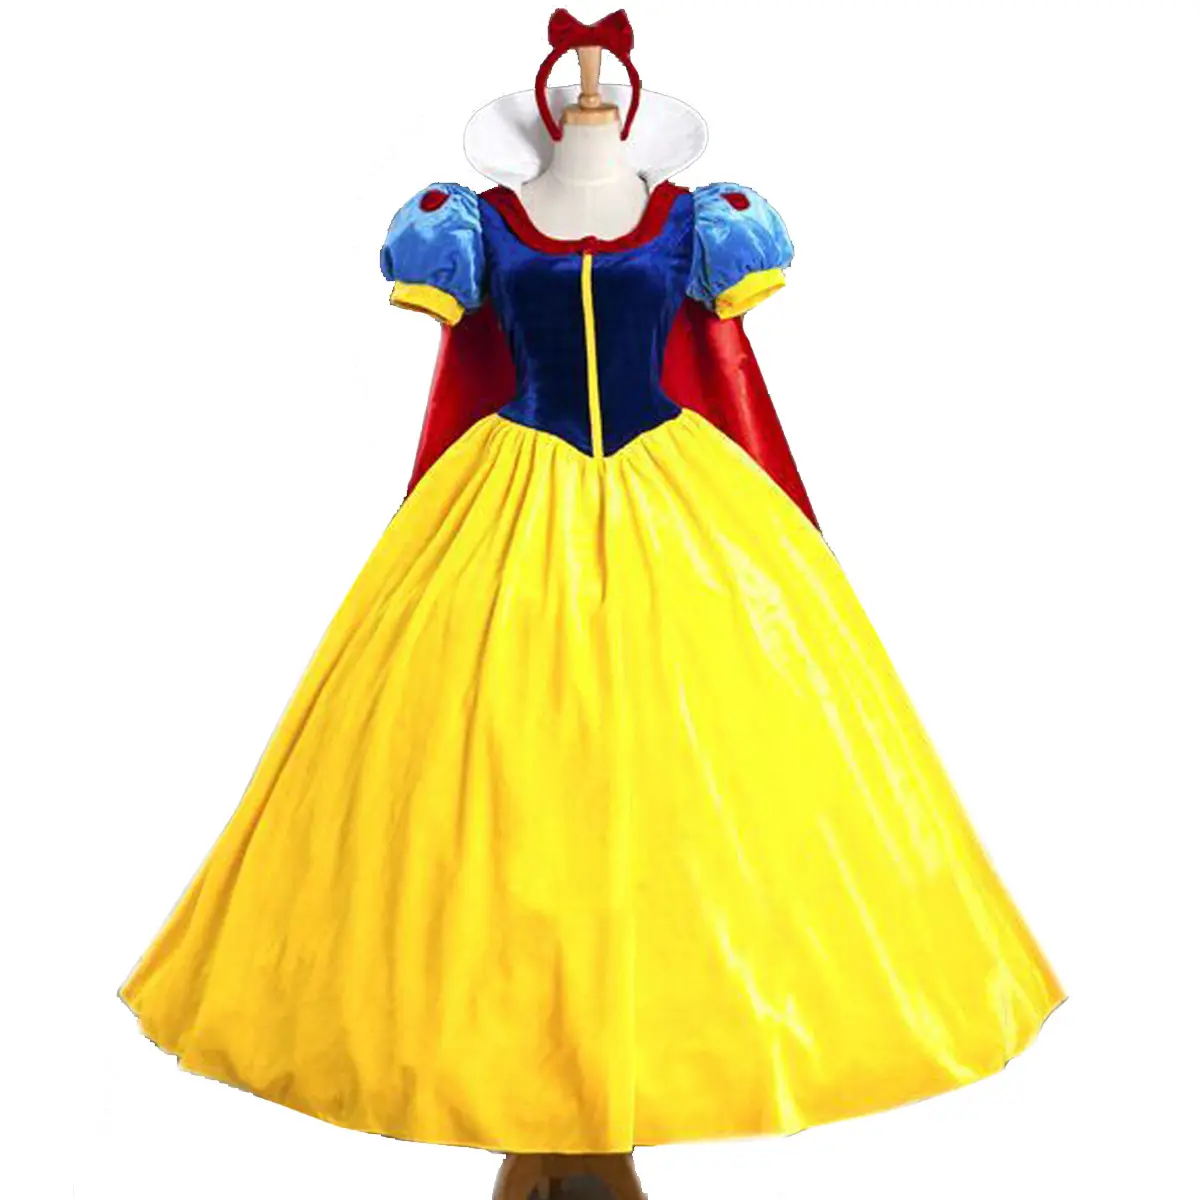 Amzdreams Hot Sale Snow White Princess Girl Dress Cosplay Party Costume Ball Girls Long Dress